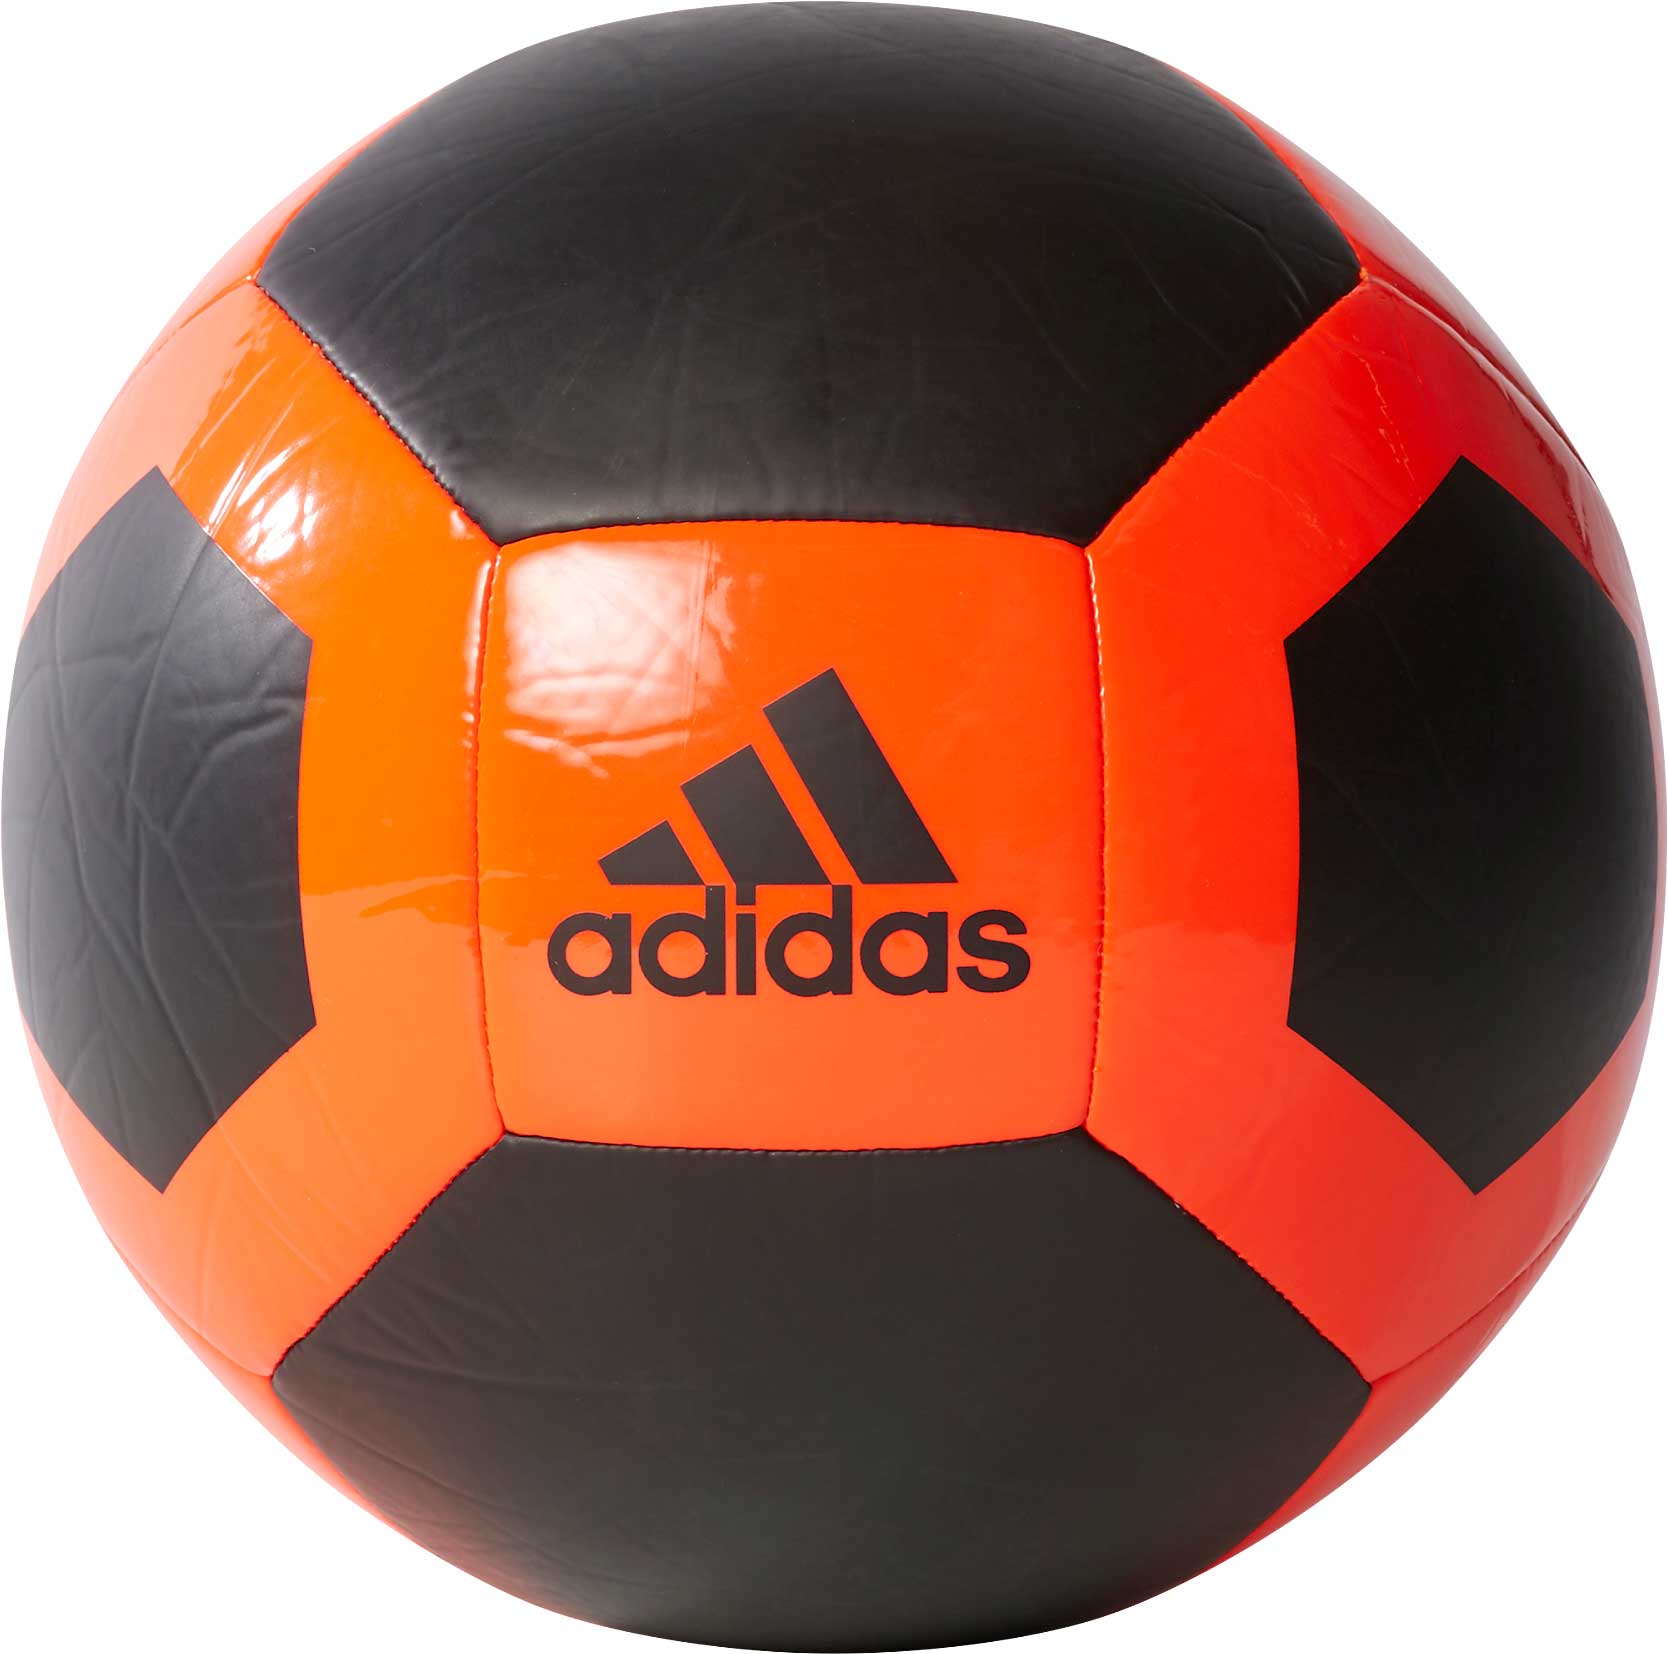 adidas Glider II Soccer Ball - Black 